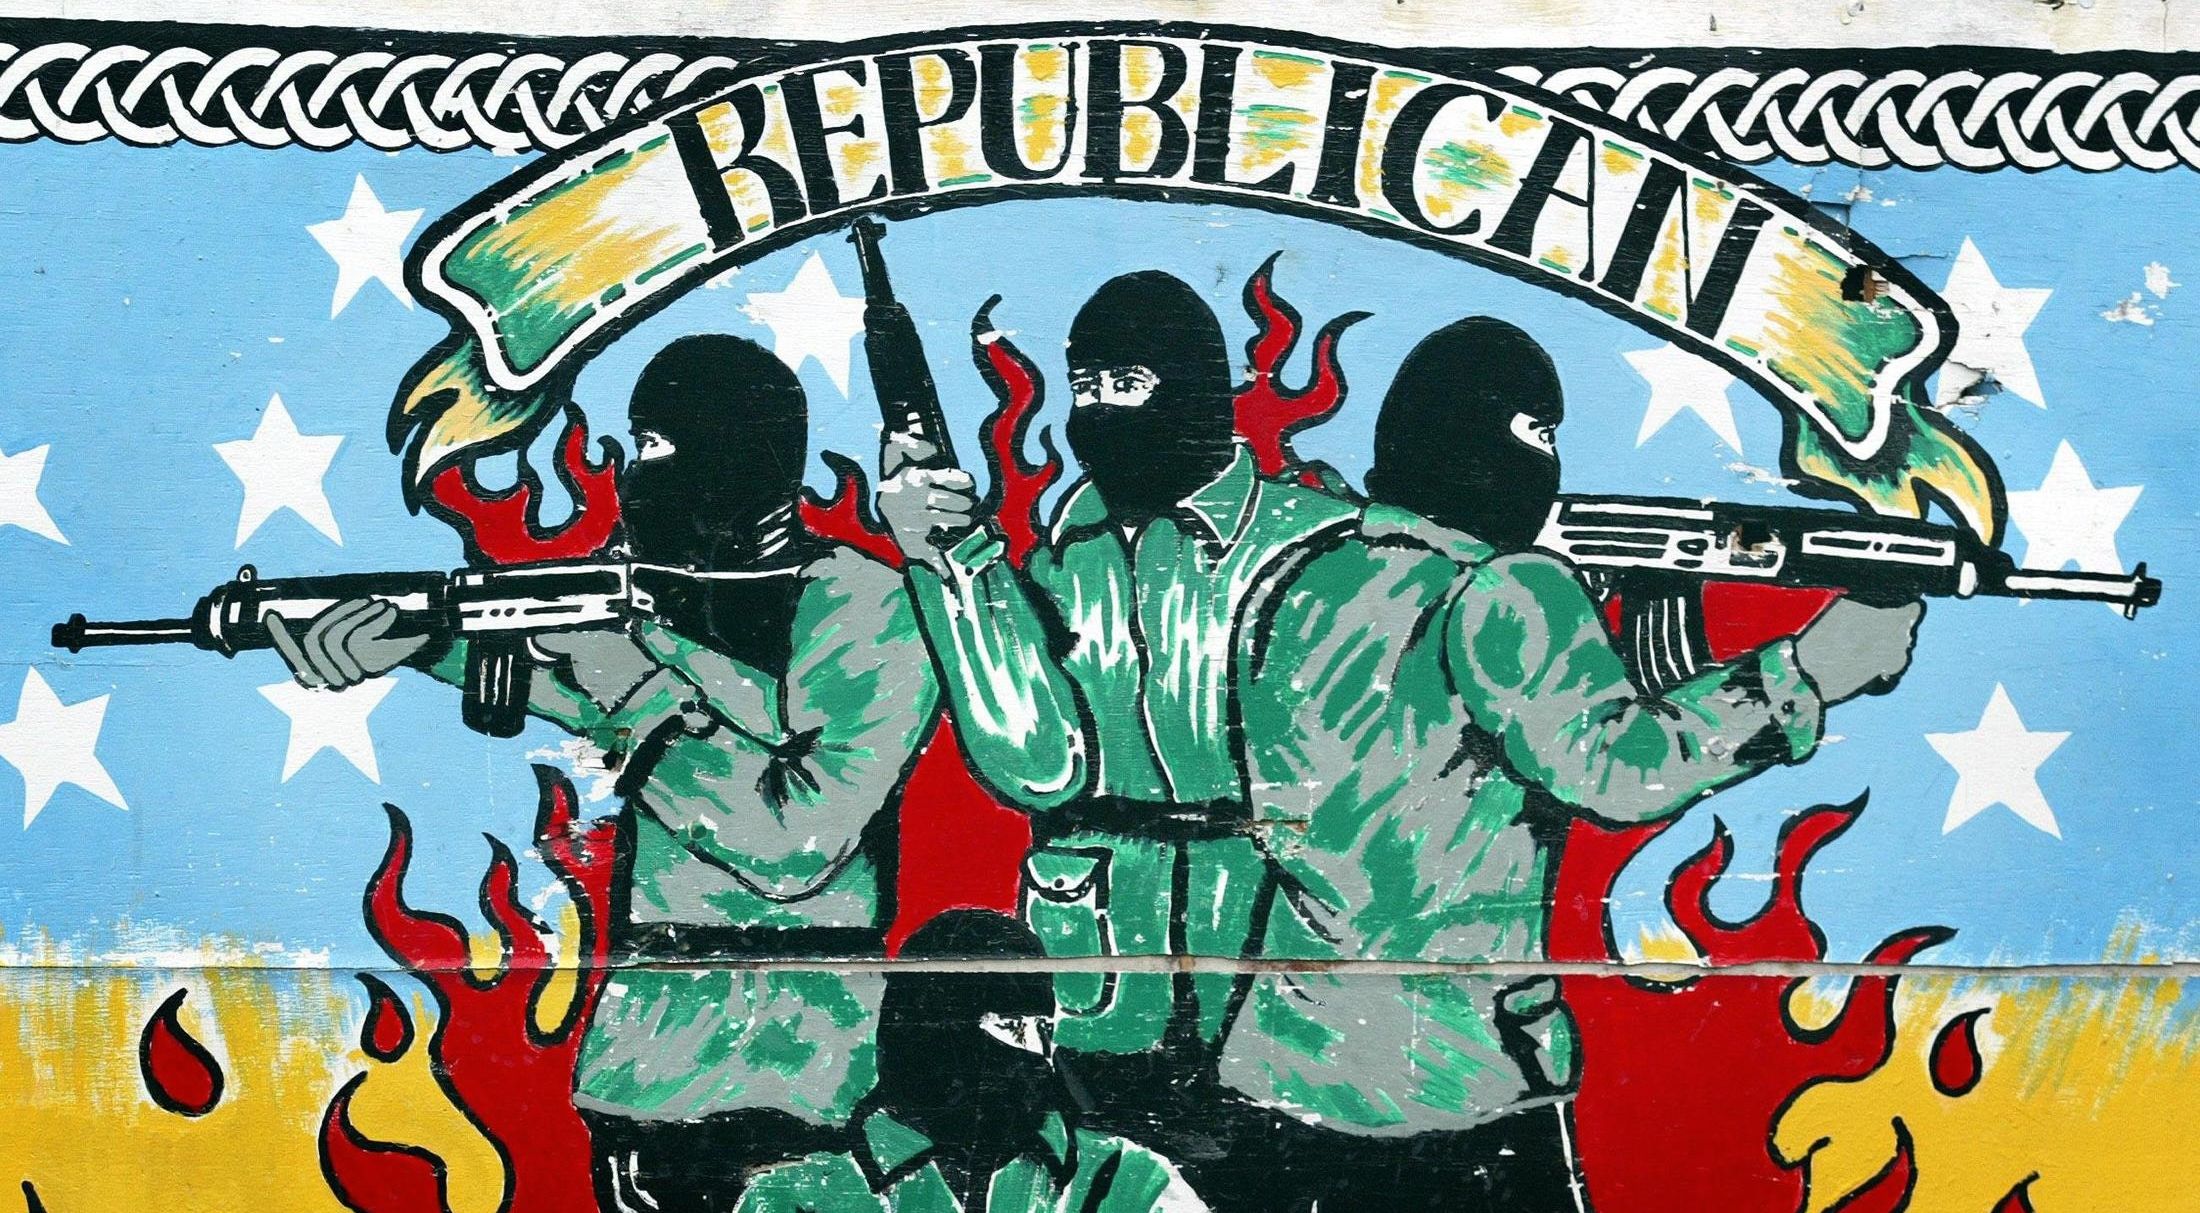 Ira tigritsa. Ira ирландская Республиканская армия 1917. Ира ирландская Республиканская армия флаг. Ира ирландская Революционная армия. Ирландская Республиканская армия символика.